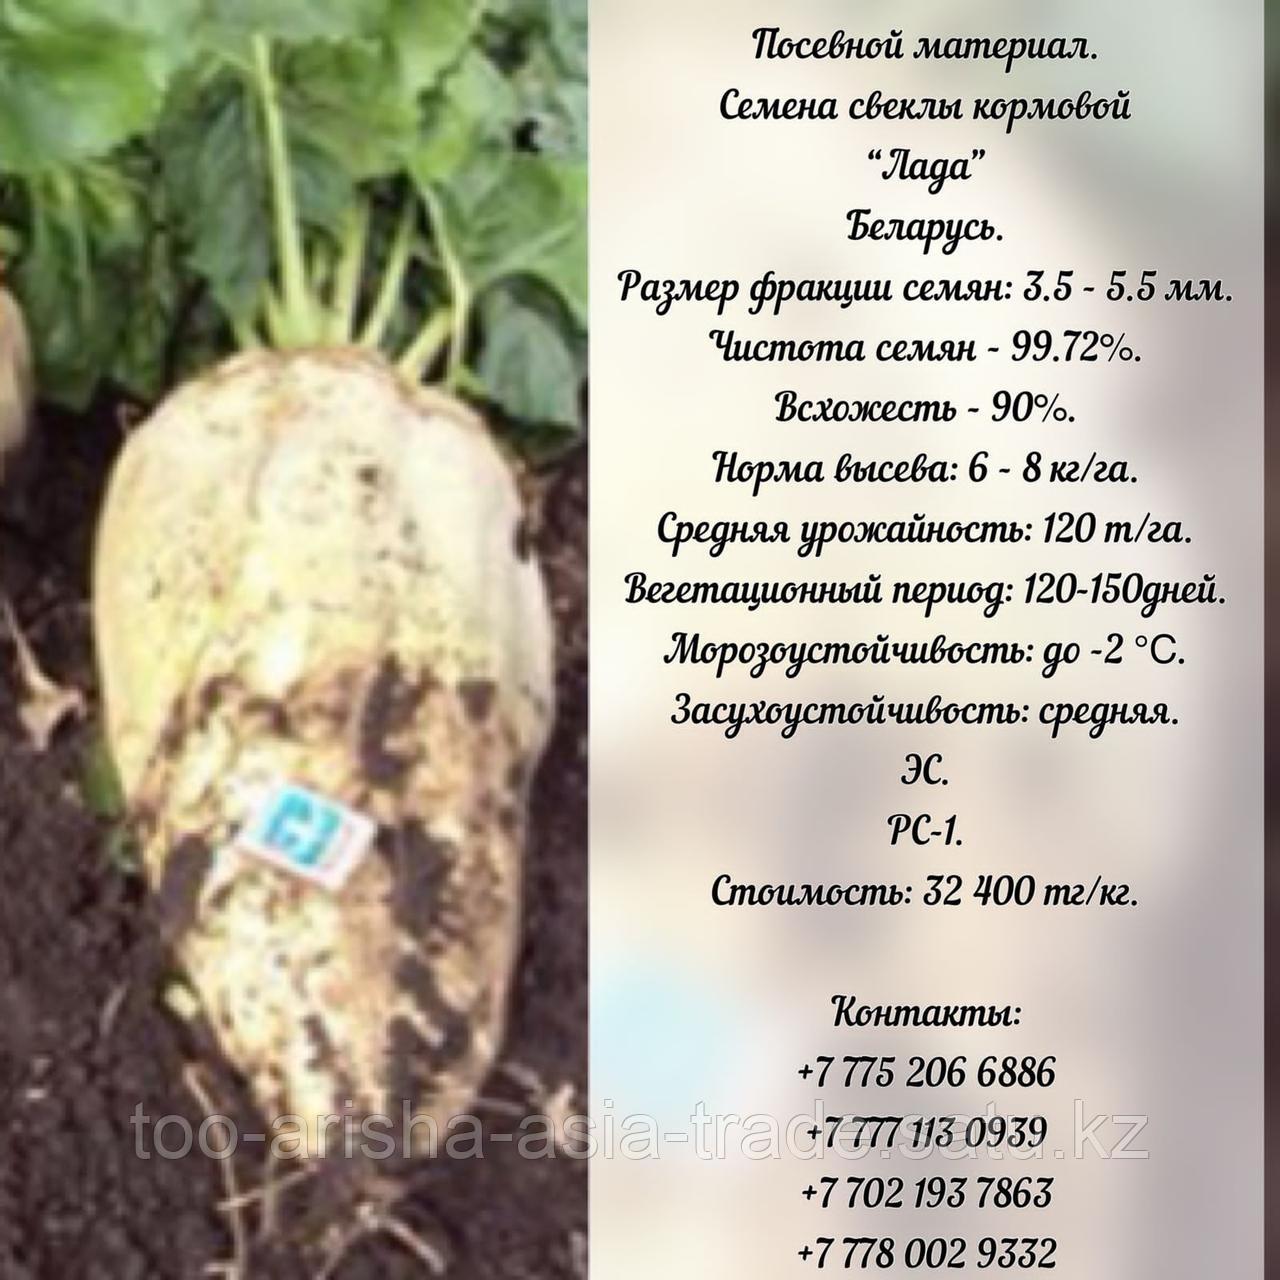 Семена кормовой свеклы "Розовый буряк"  ЭС, РС -1  Беларусь